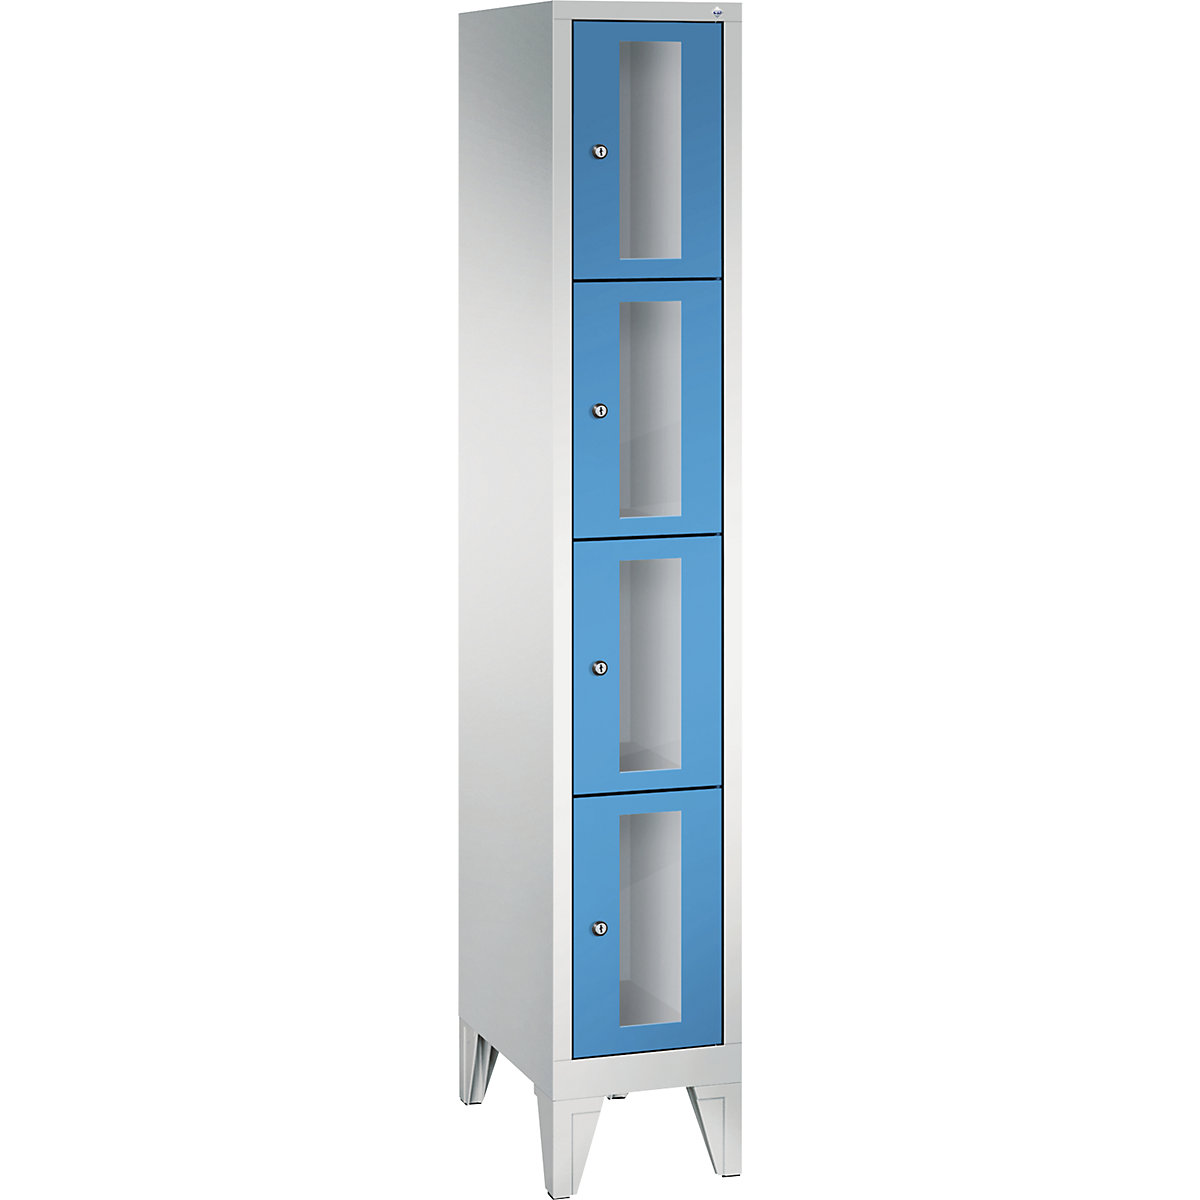 C+P – Armario de compartimentos CLASSIC, altura de compartimento 375 mm, con patas, 4 compartimentos, 320 mm de anchura, puerta en azul luminoso